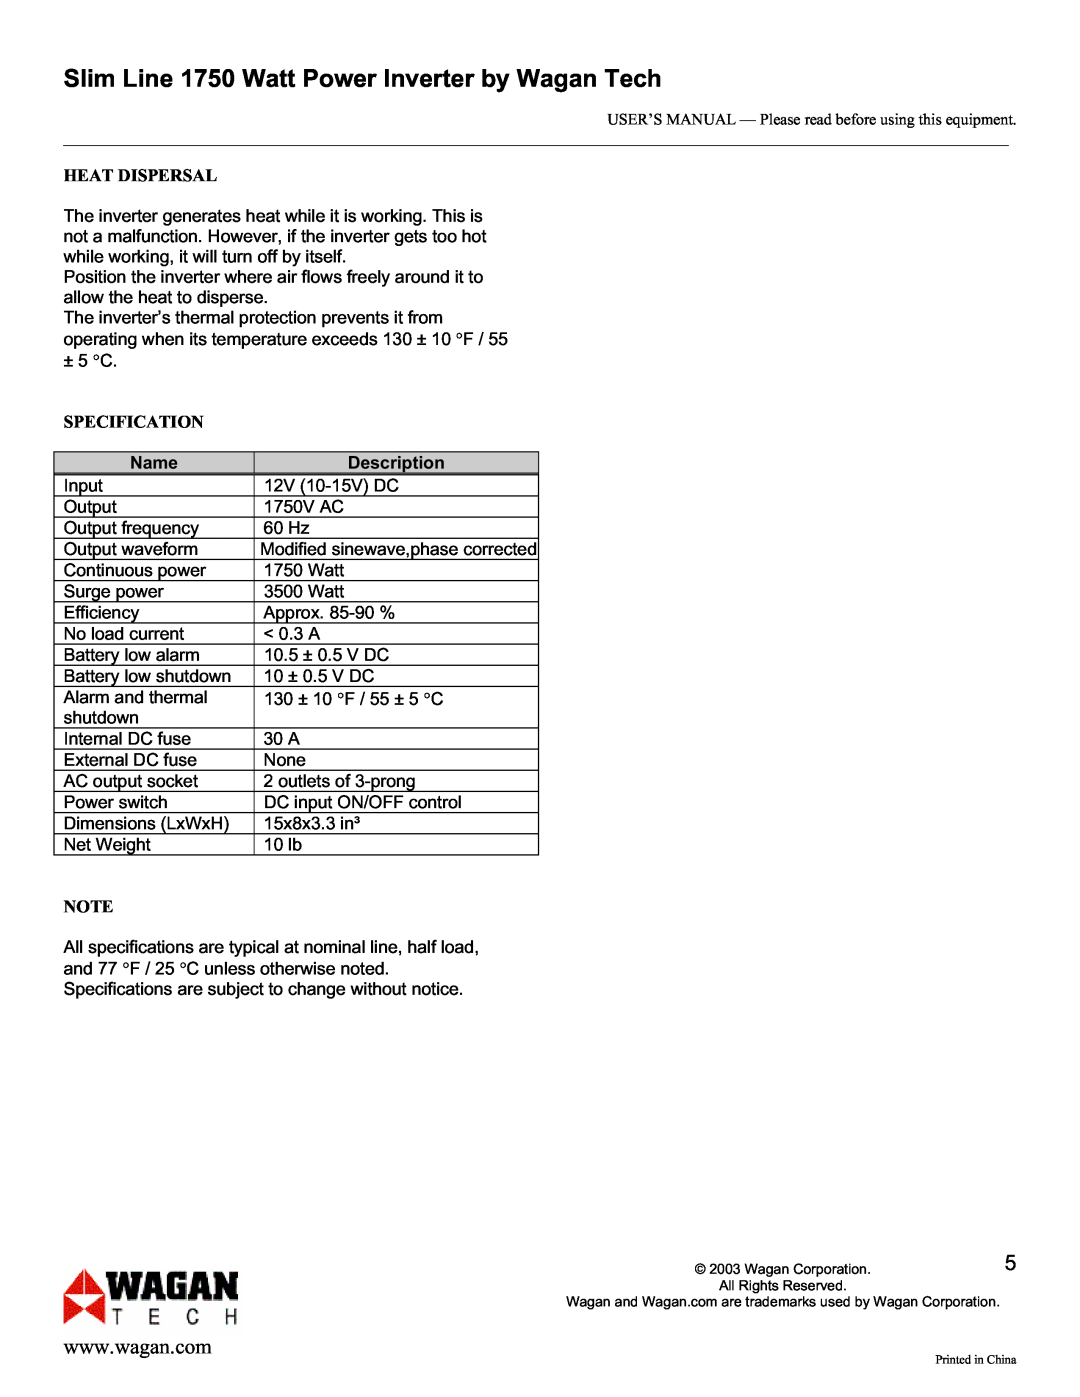 Wagan user manual Heat Dispersal, Specification, Name, Description, Slim Line 1750 Watt Power Inverter by Wagan Tech 